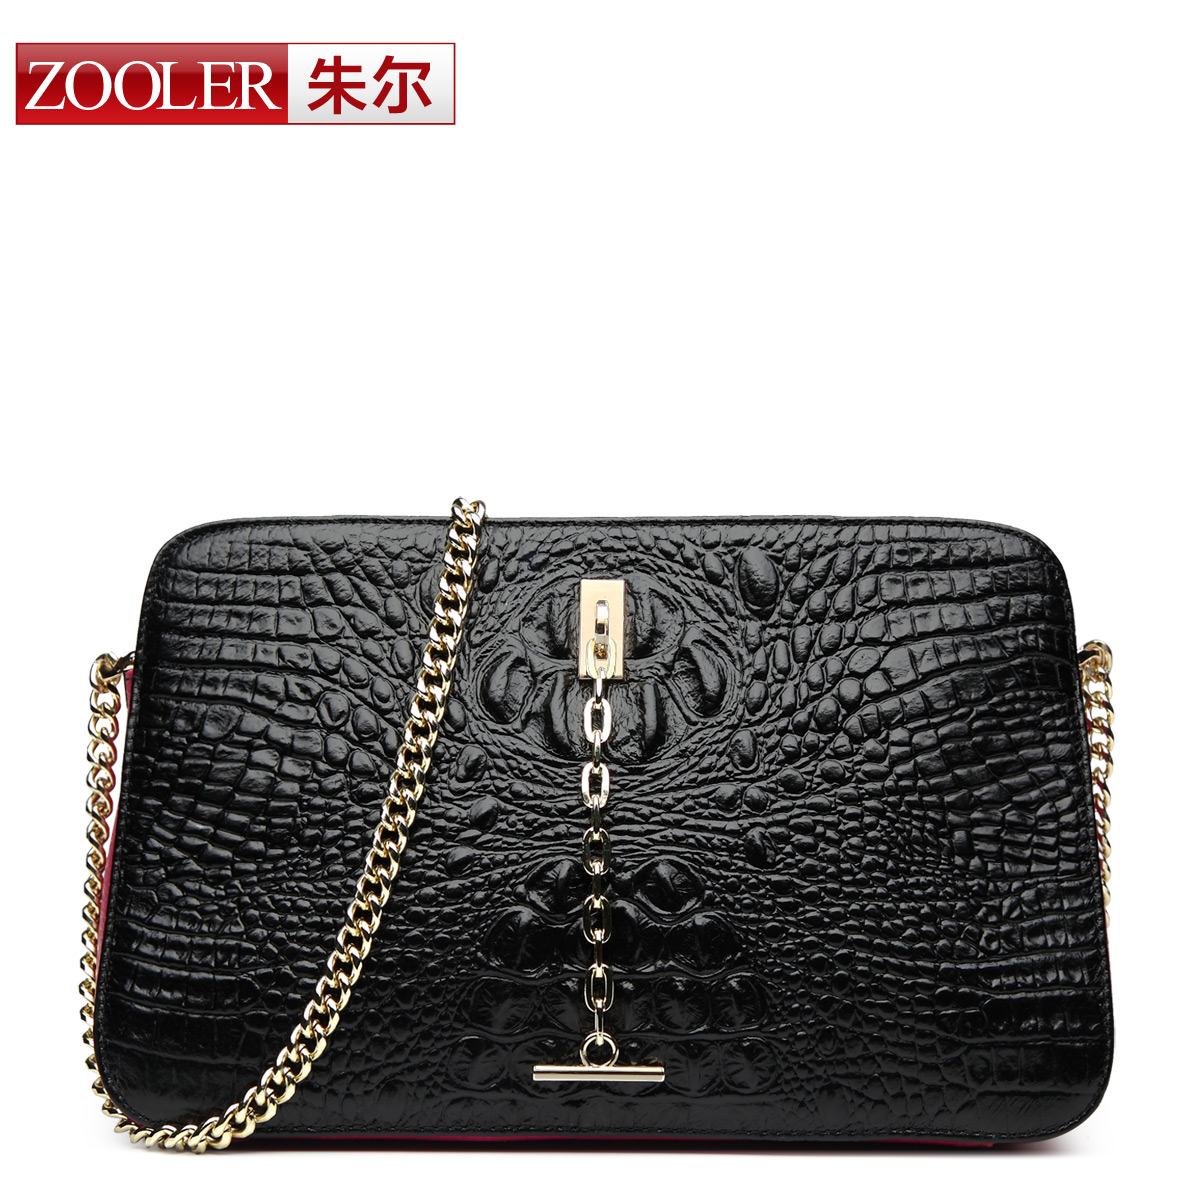 For Crocodile bag 2014 autumn and winter bags fashion cowhide women's handbag chain bag small bag women's